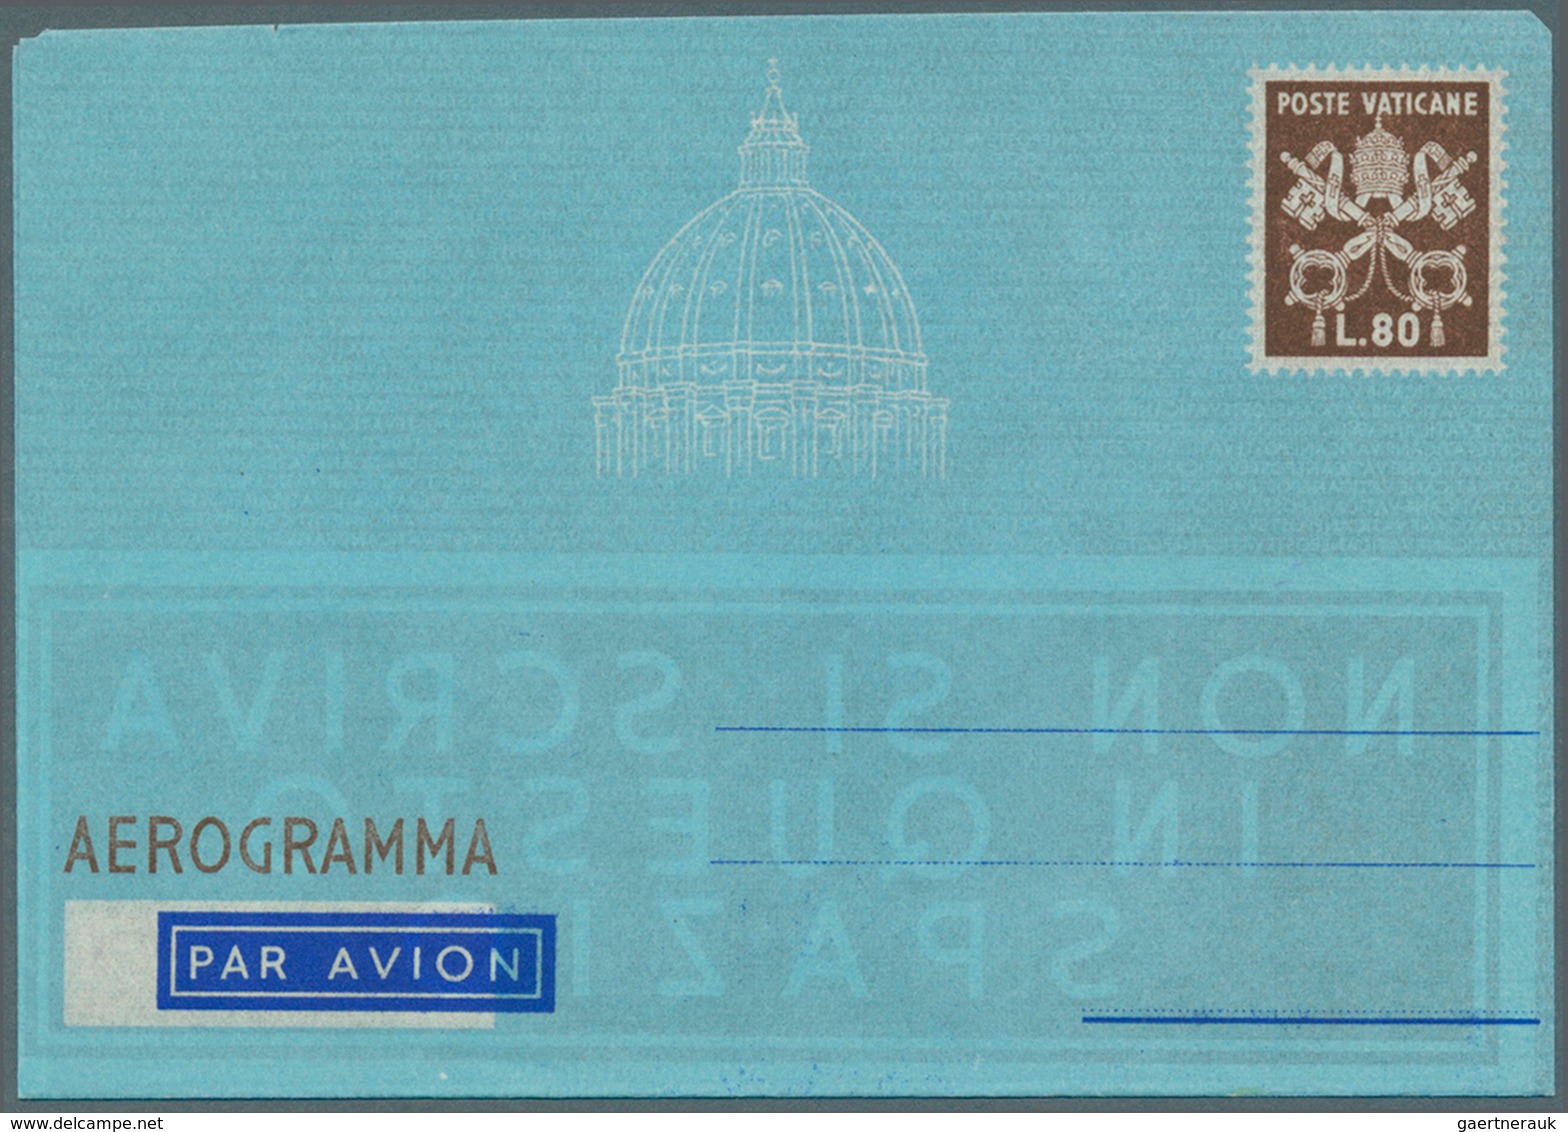 Vatikan - Ganzsachen: 1951, Aerogramme Of The Vatican L. 80 "AEROGRAMMA" Brown, Unused. Unlisted Var - Postal Stationeries